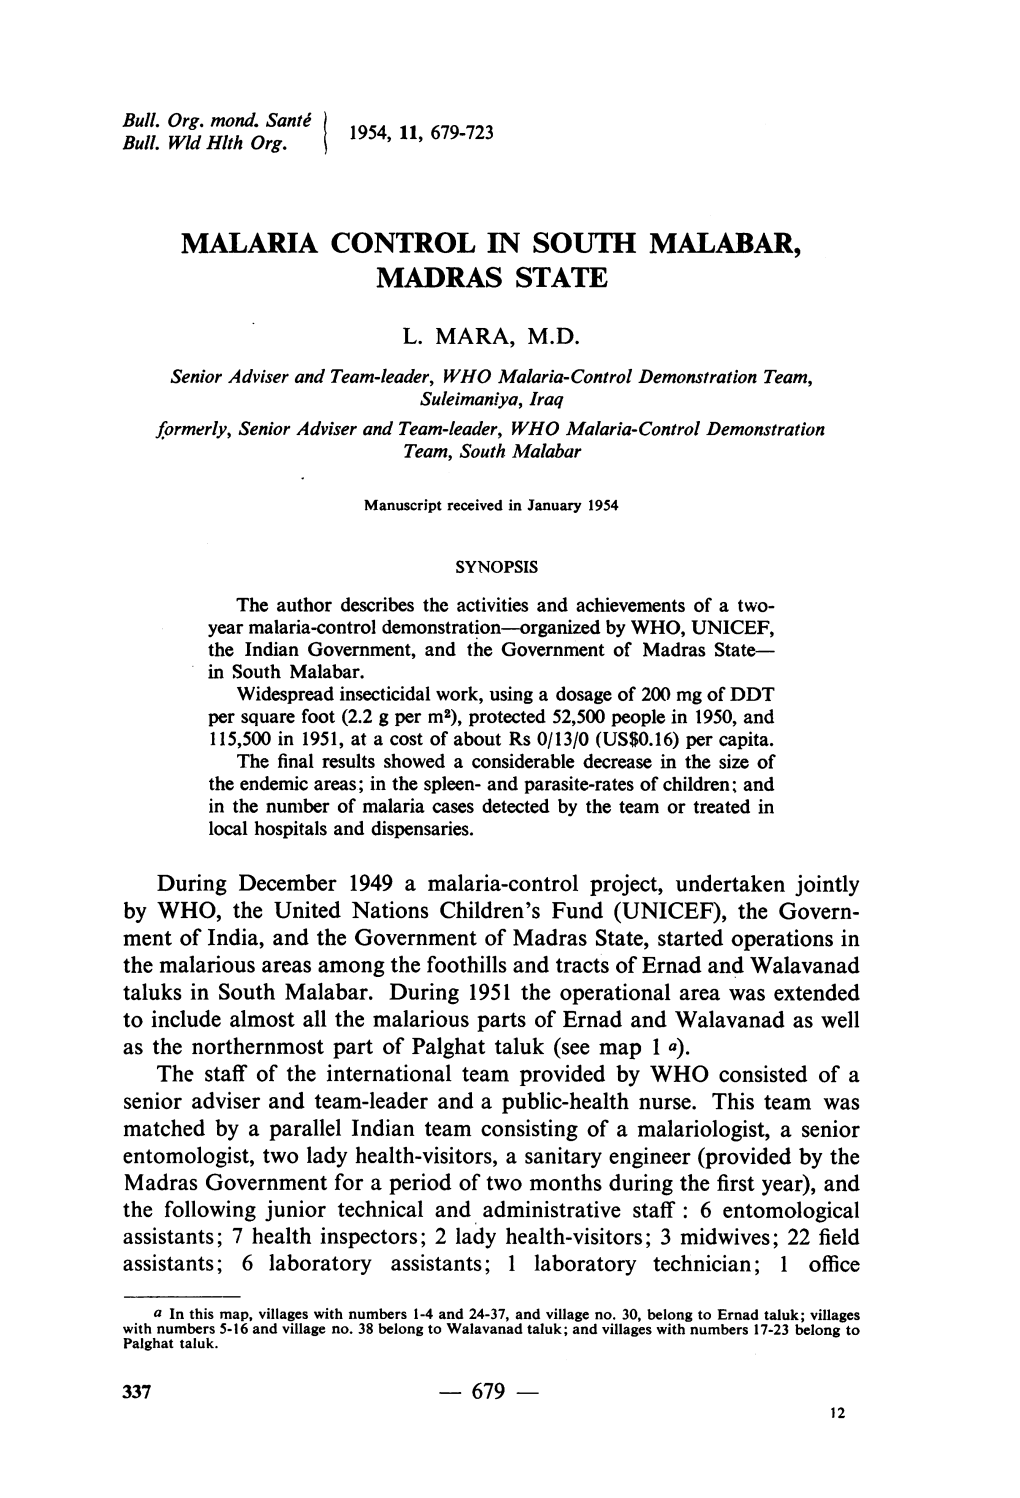 Malaria Control in South Malabar, Madras State